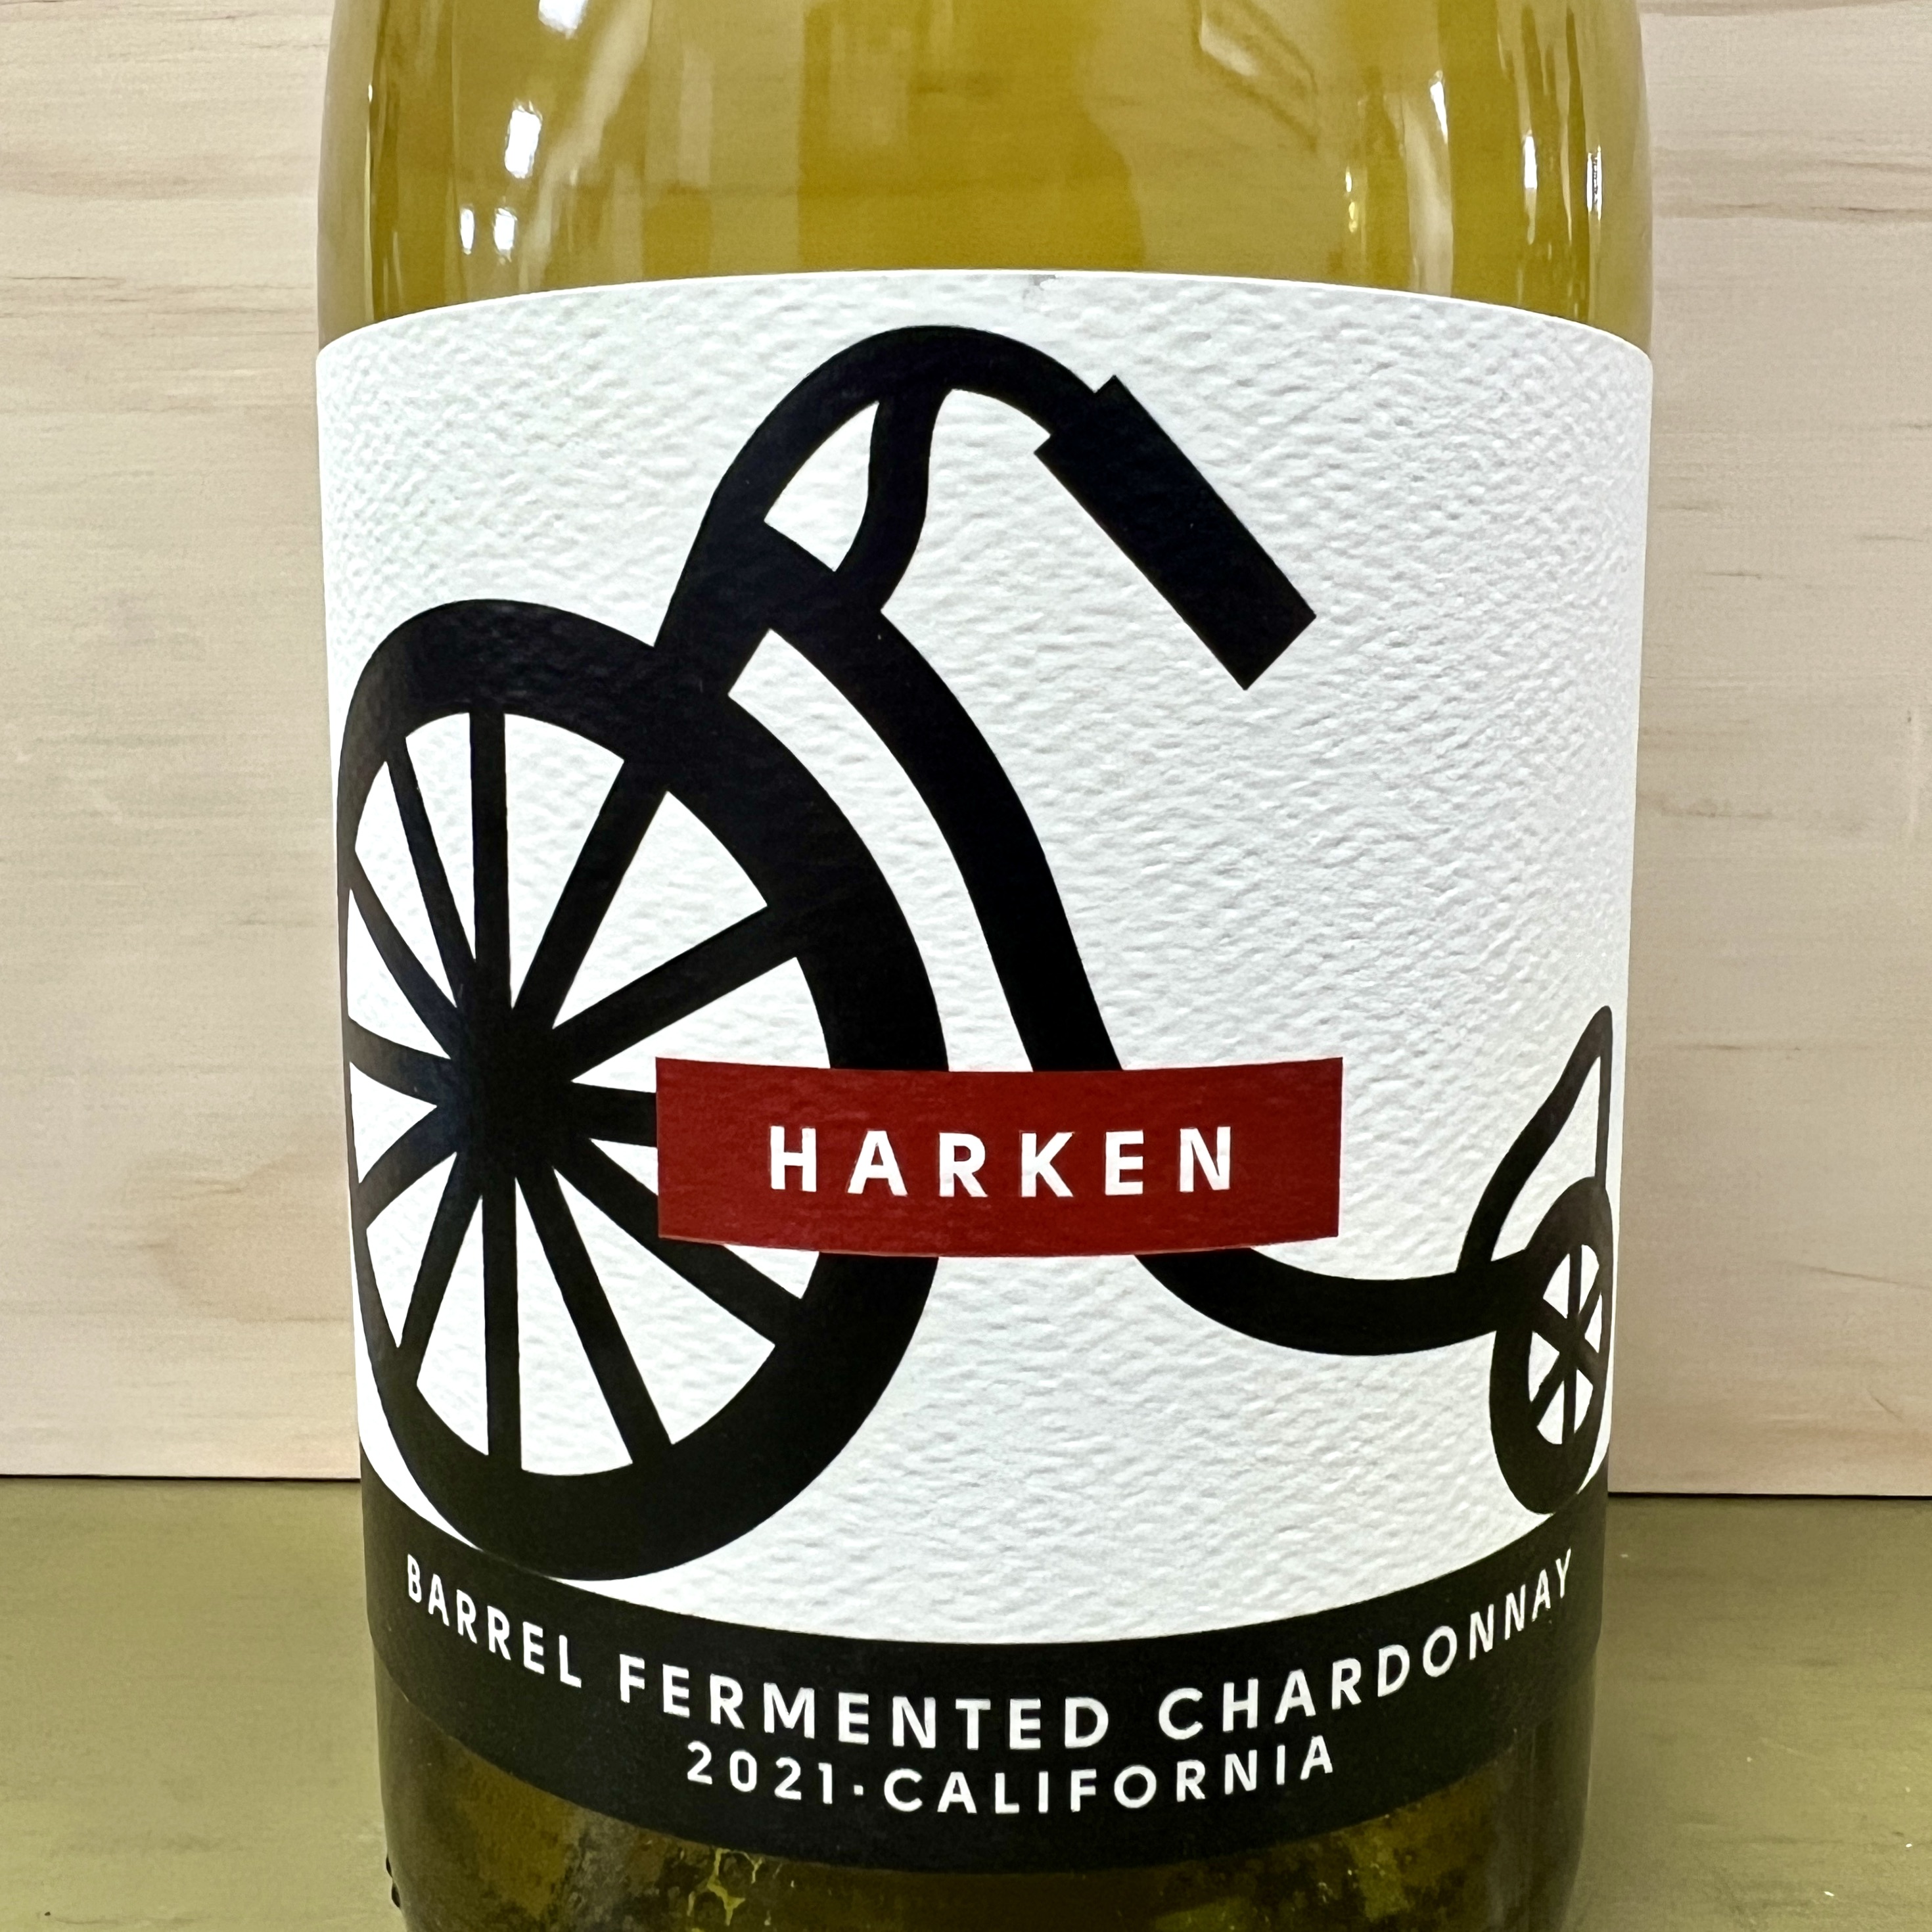 Harken Barrel Fermented Chardonnay 2021 California